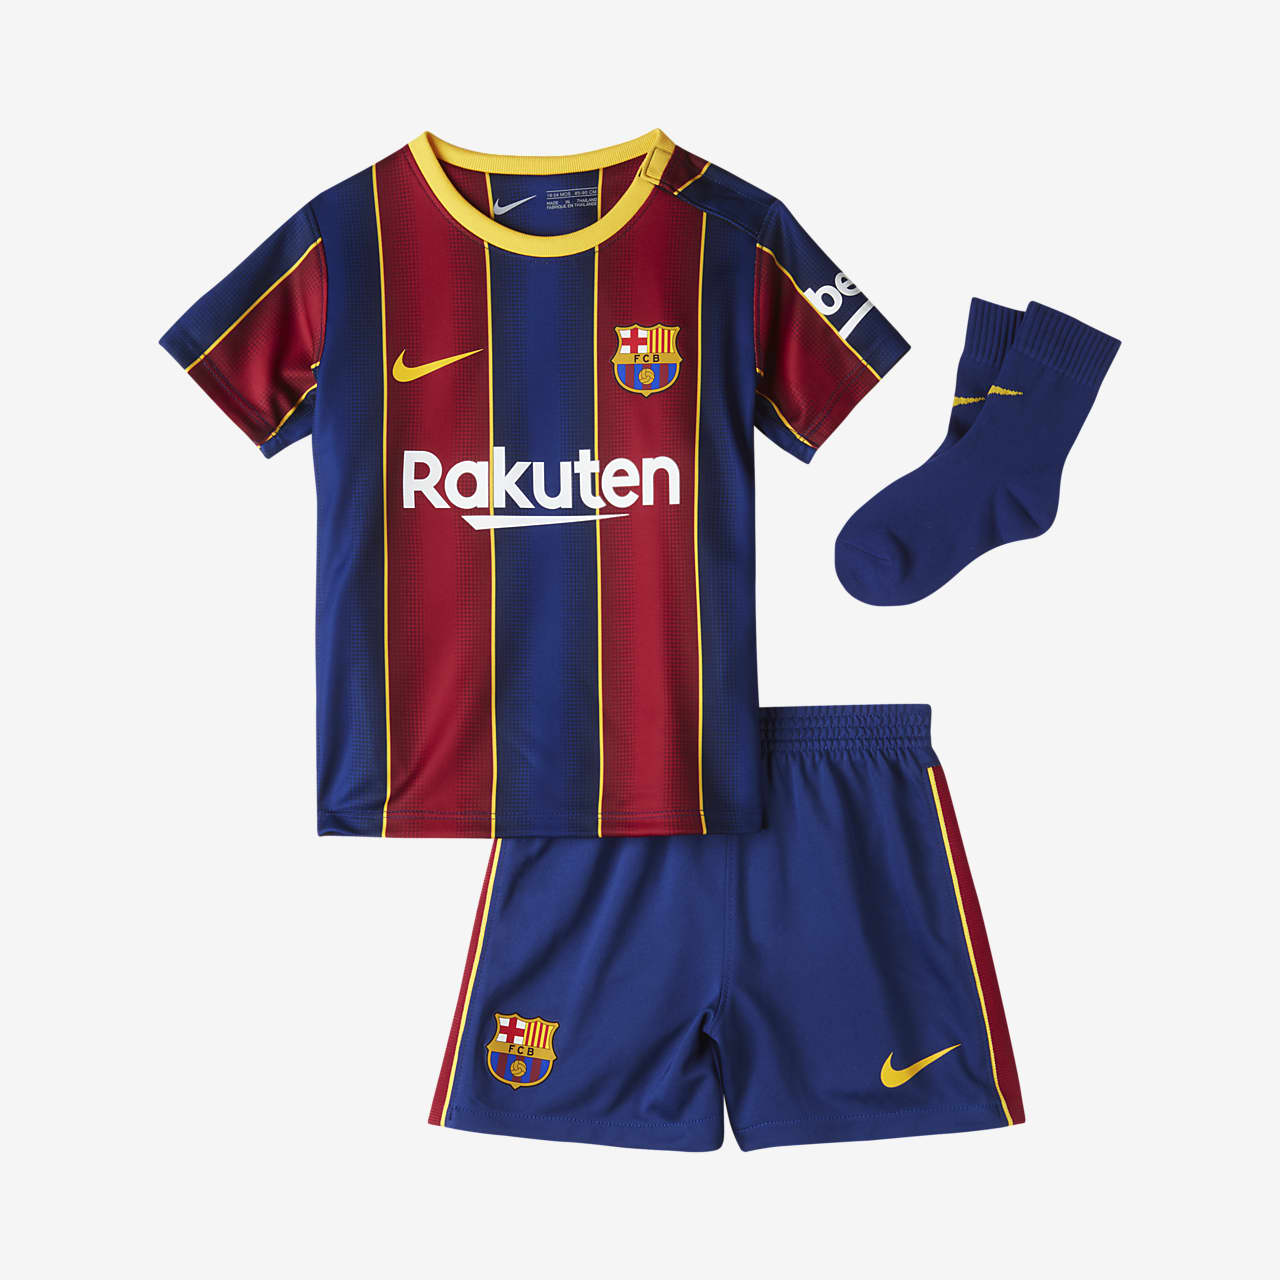 Baby and Toddler Football Kit. Nike 